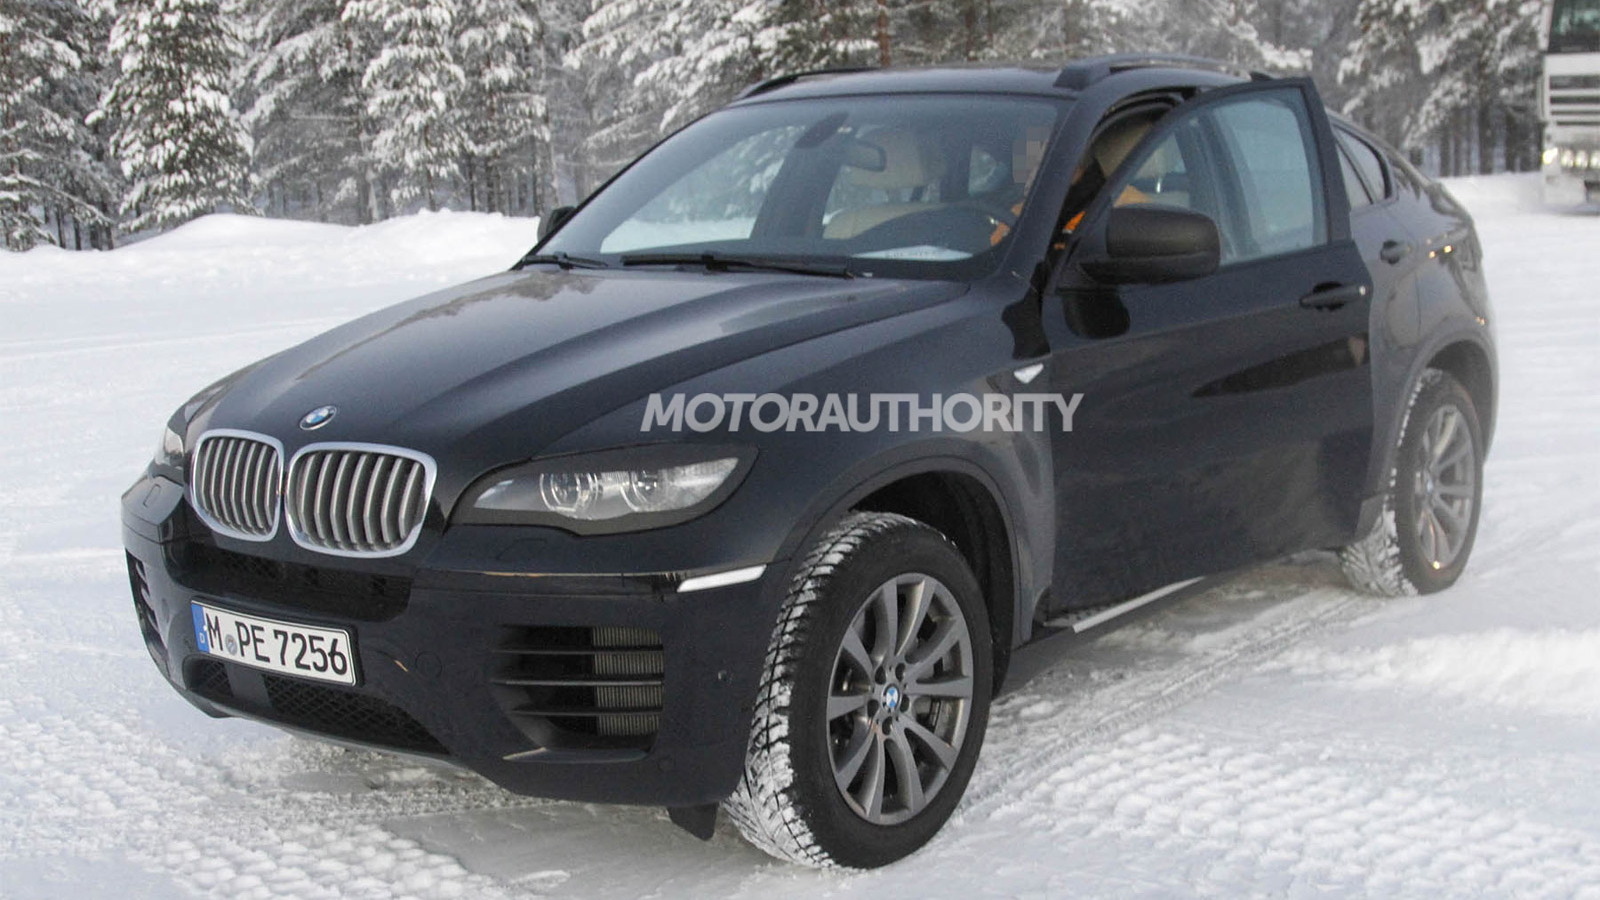 2013 BMW X6 facelift spy shots